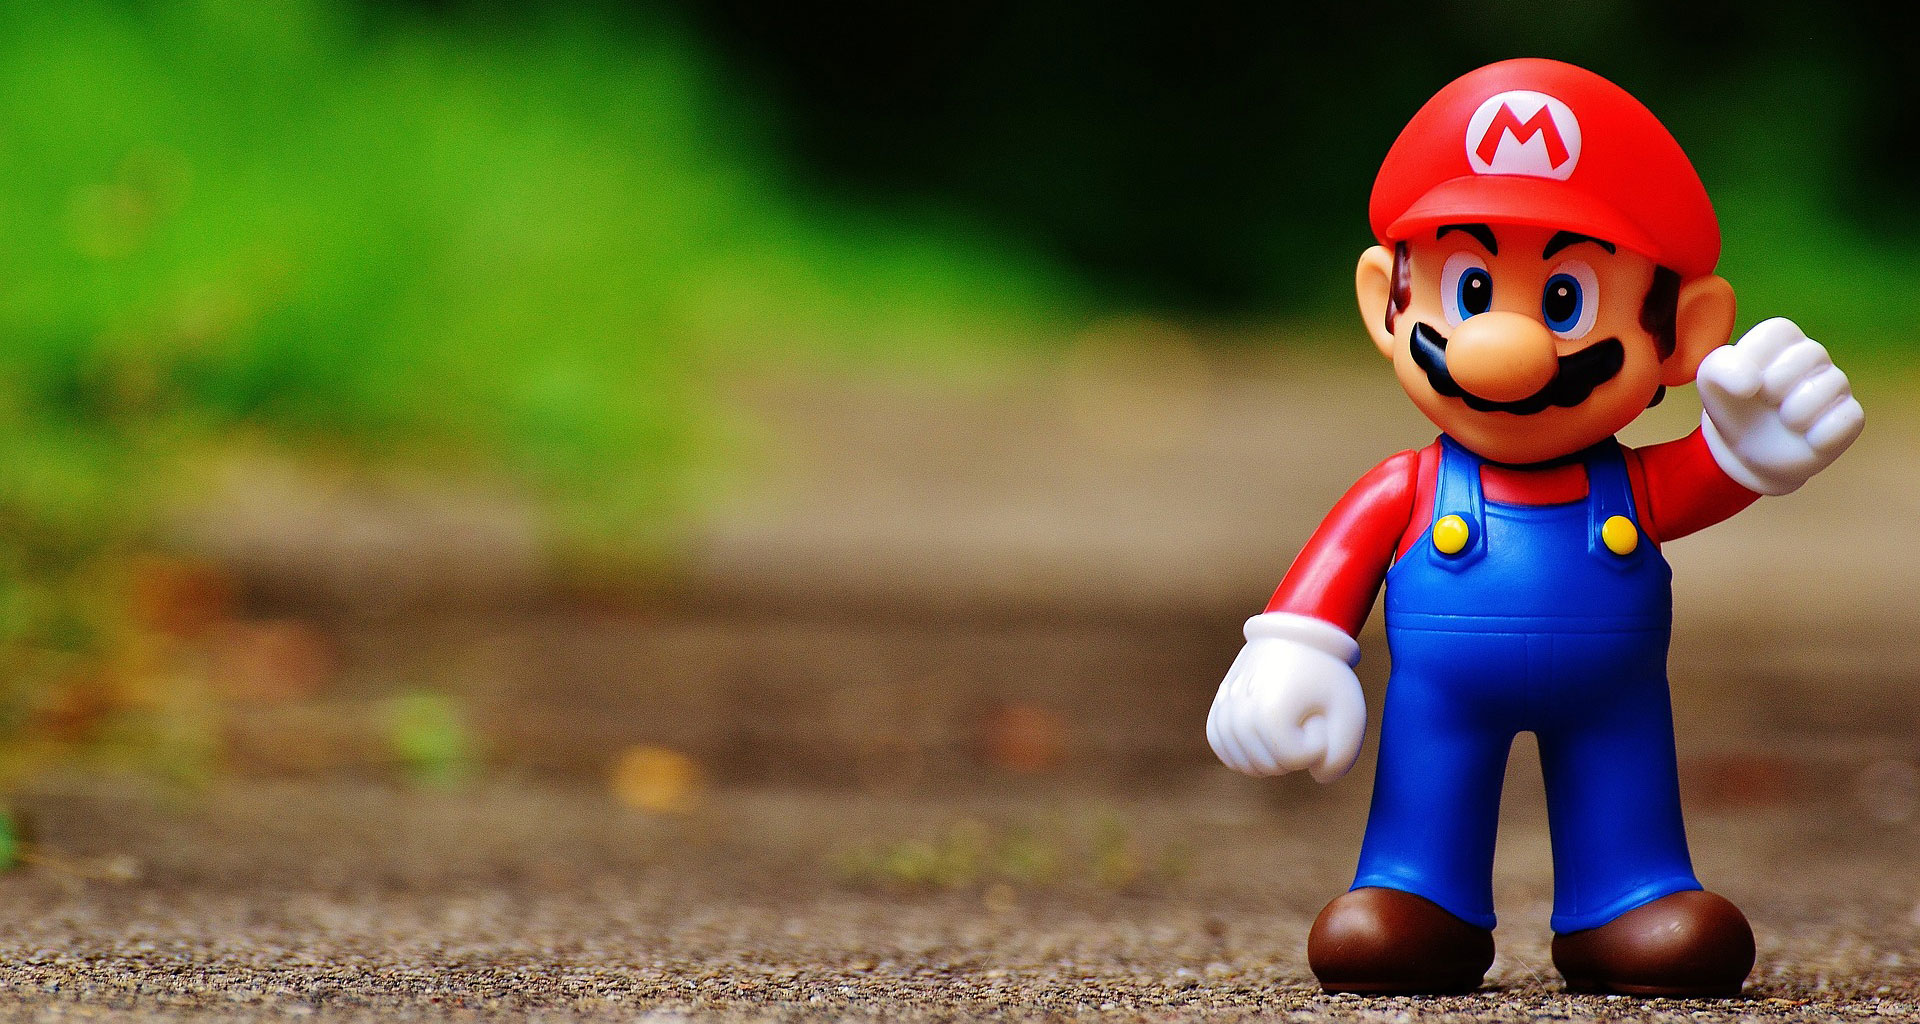 Super Mario RPG Remake – Most Effective Ways to Level Up